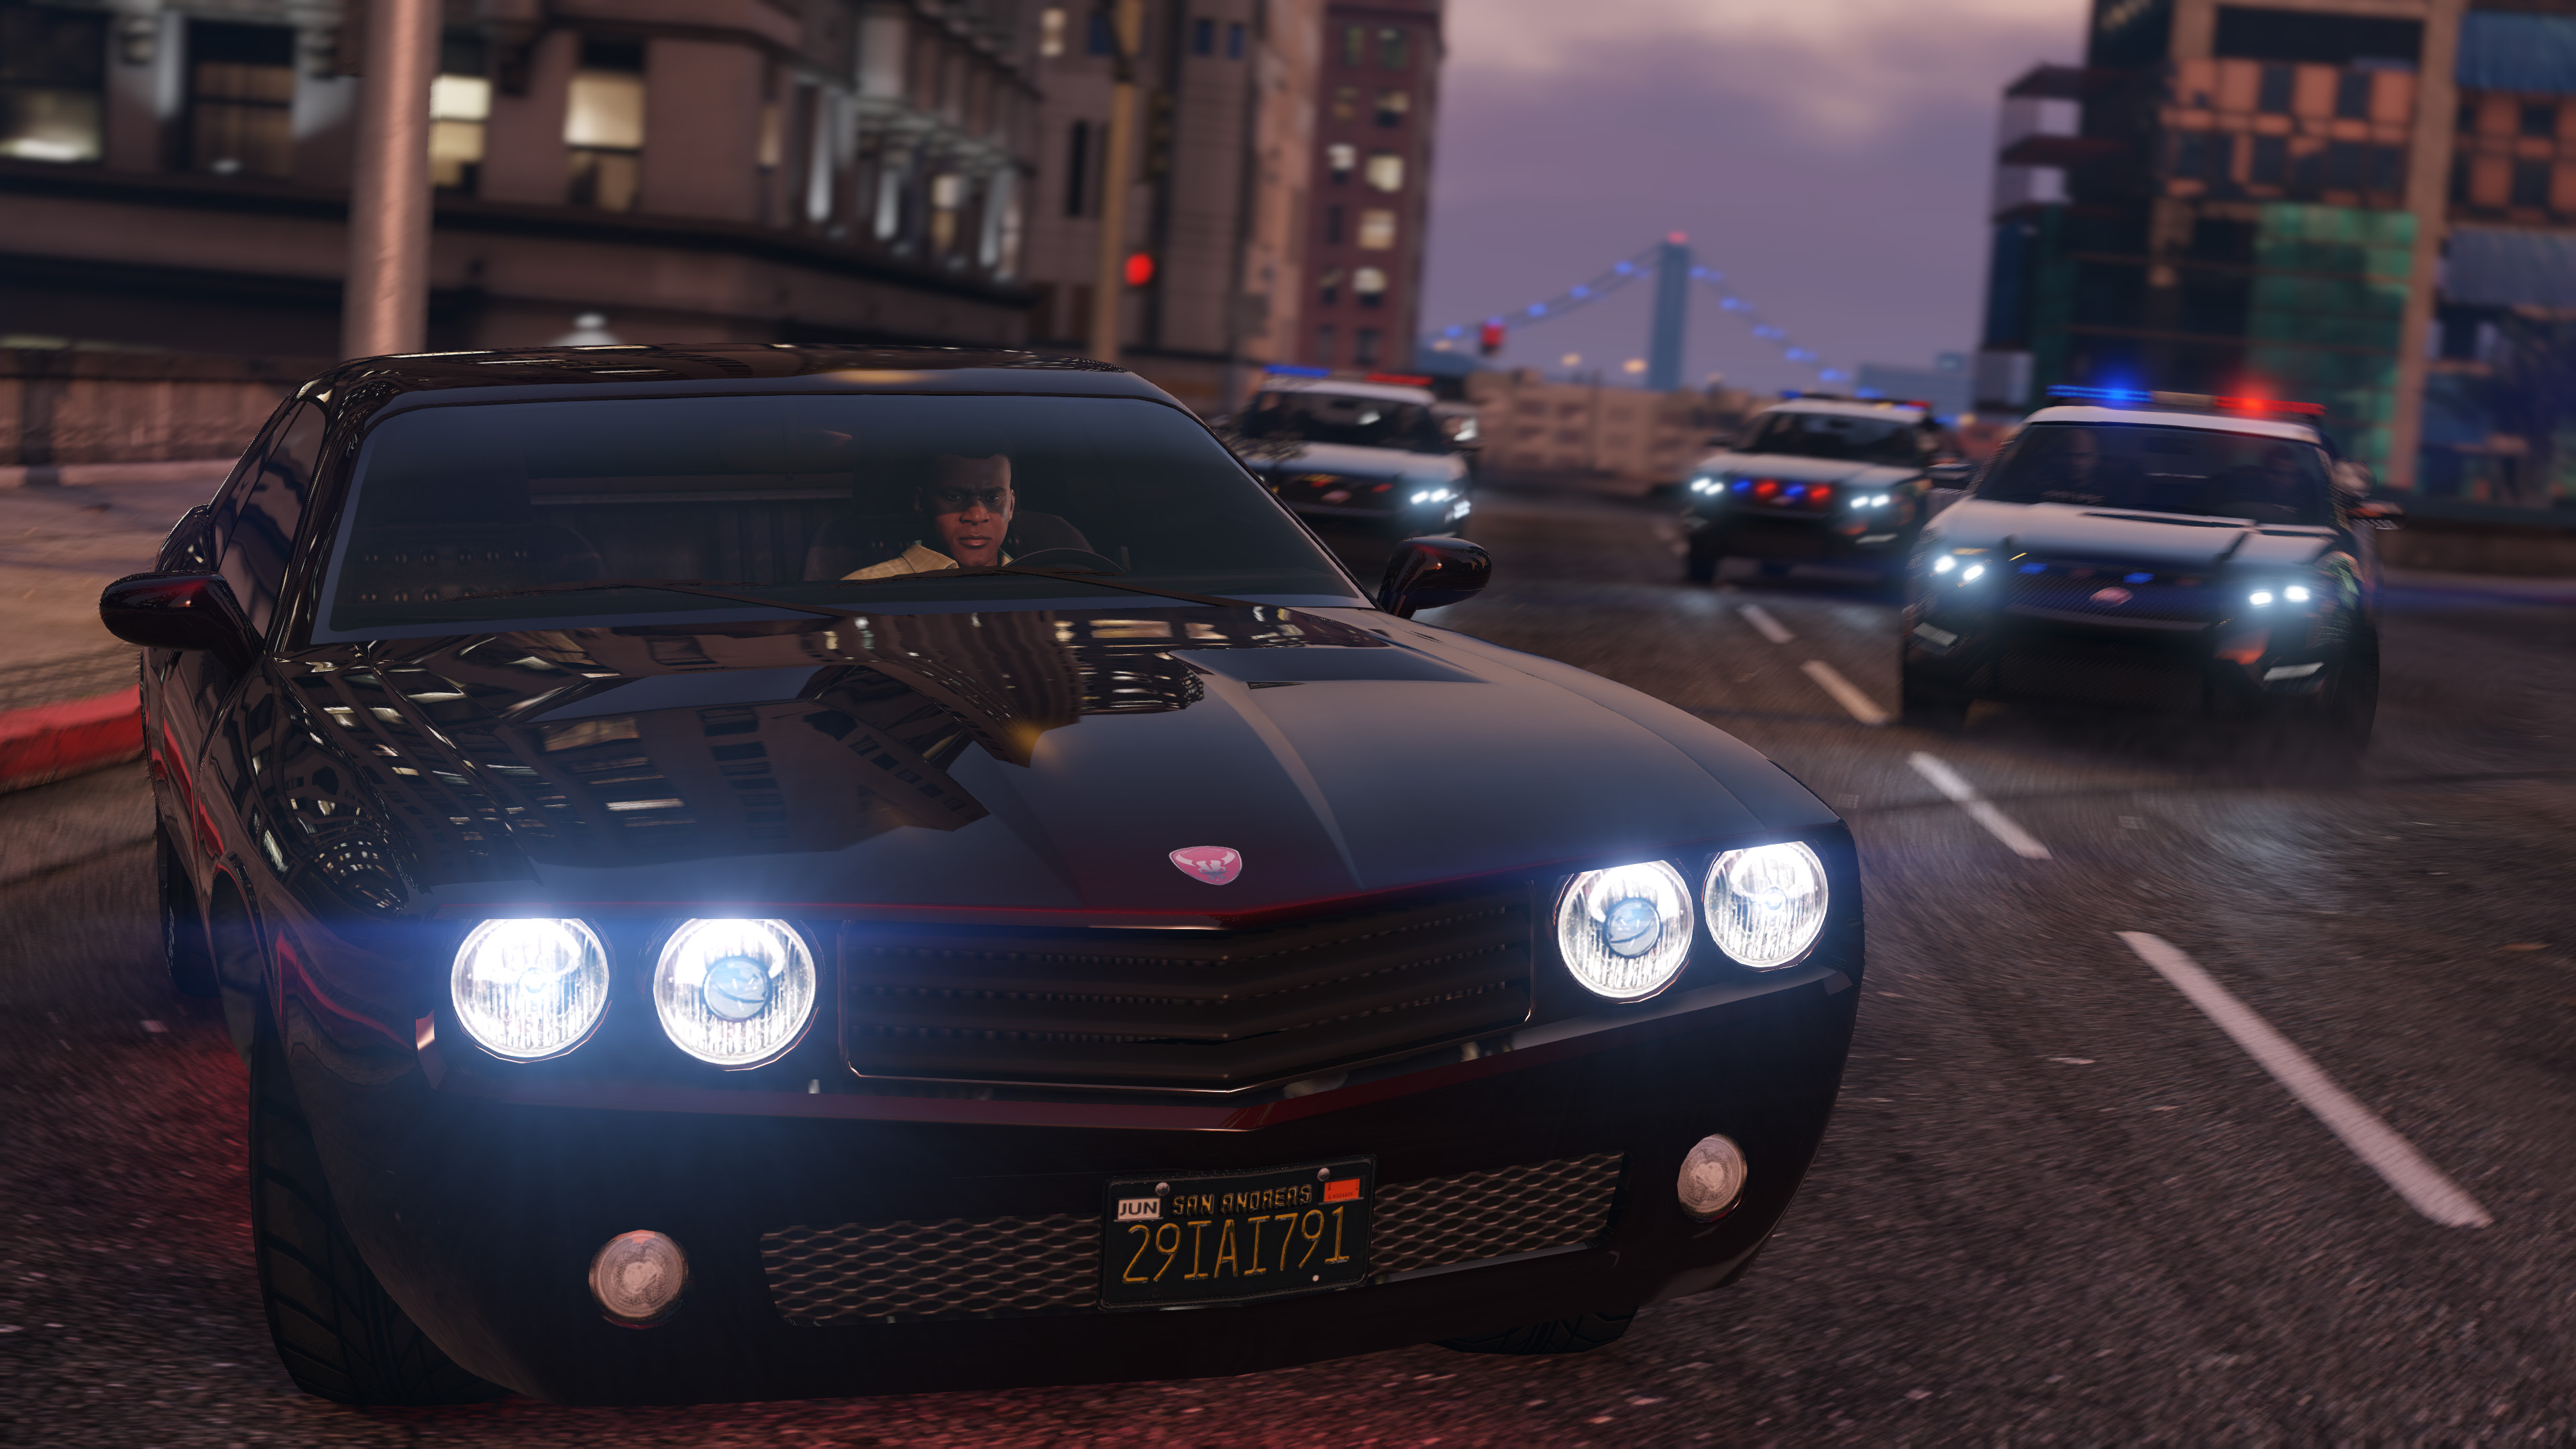 Franklin Clinton Grand Theft Auto V Police Car 3840x2160